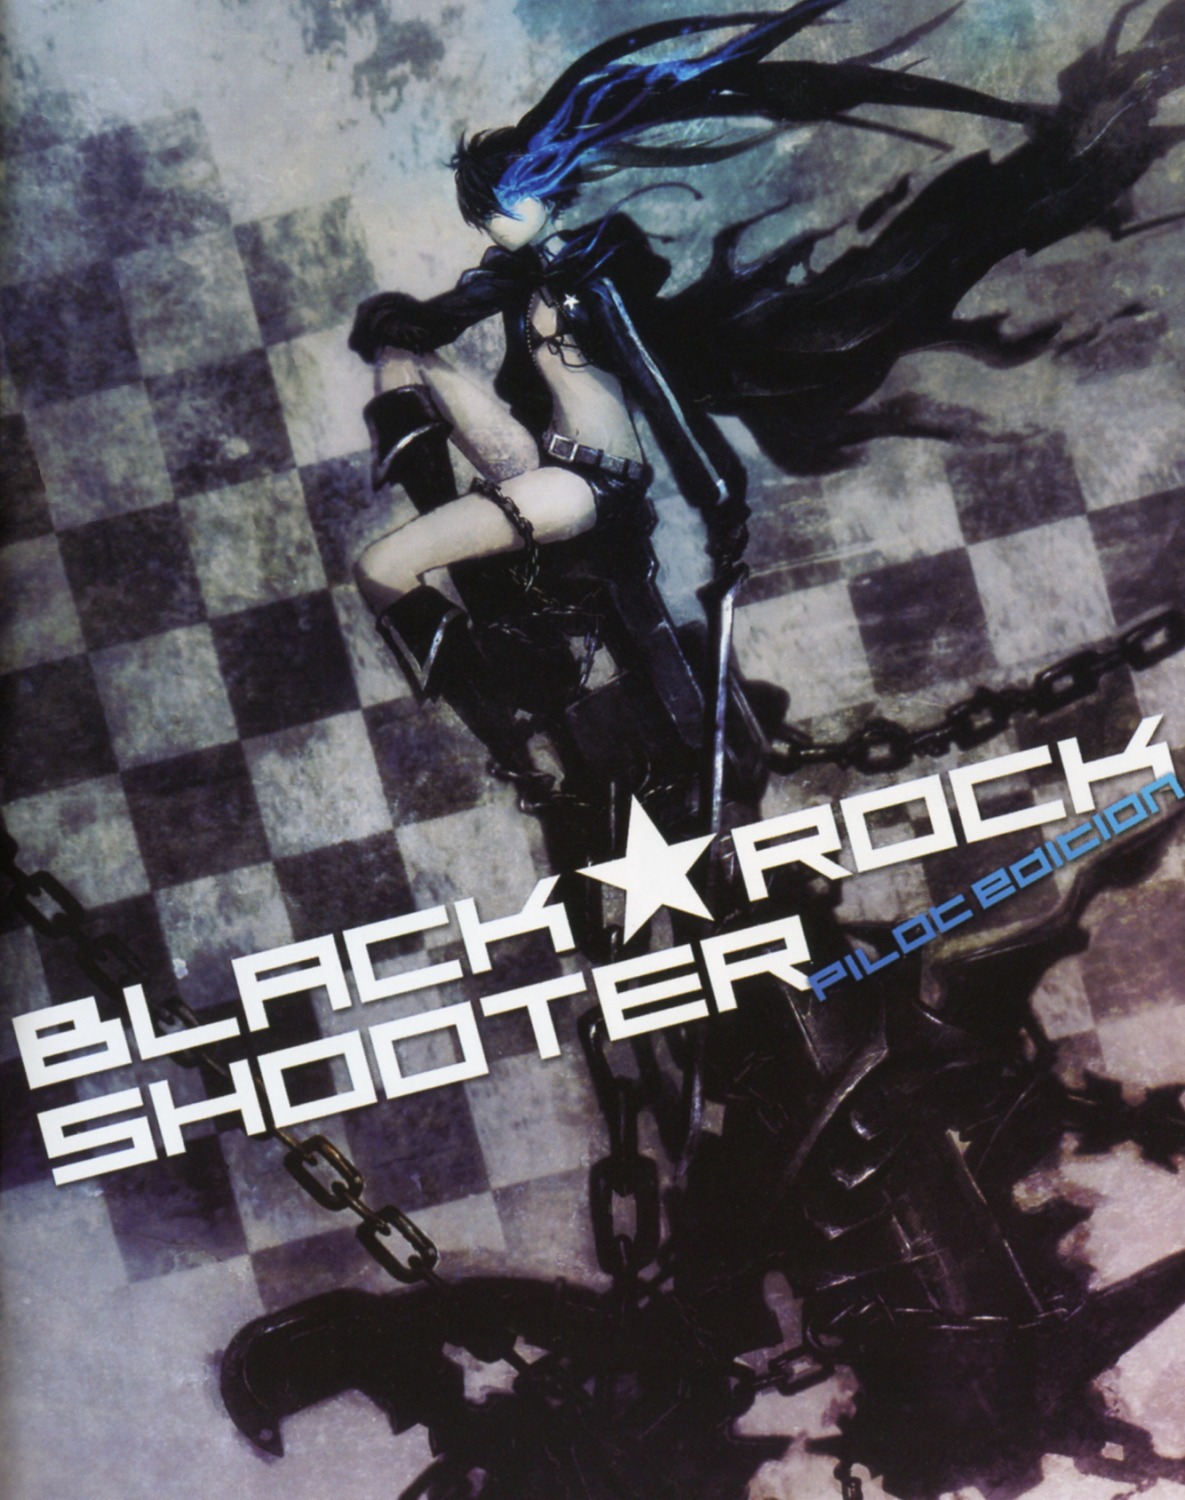 black_rock_shooter black_rock_shooter_(character)